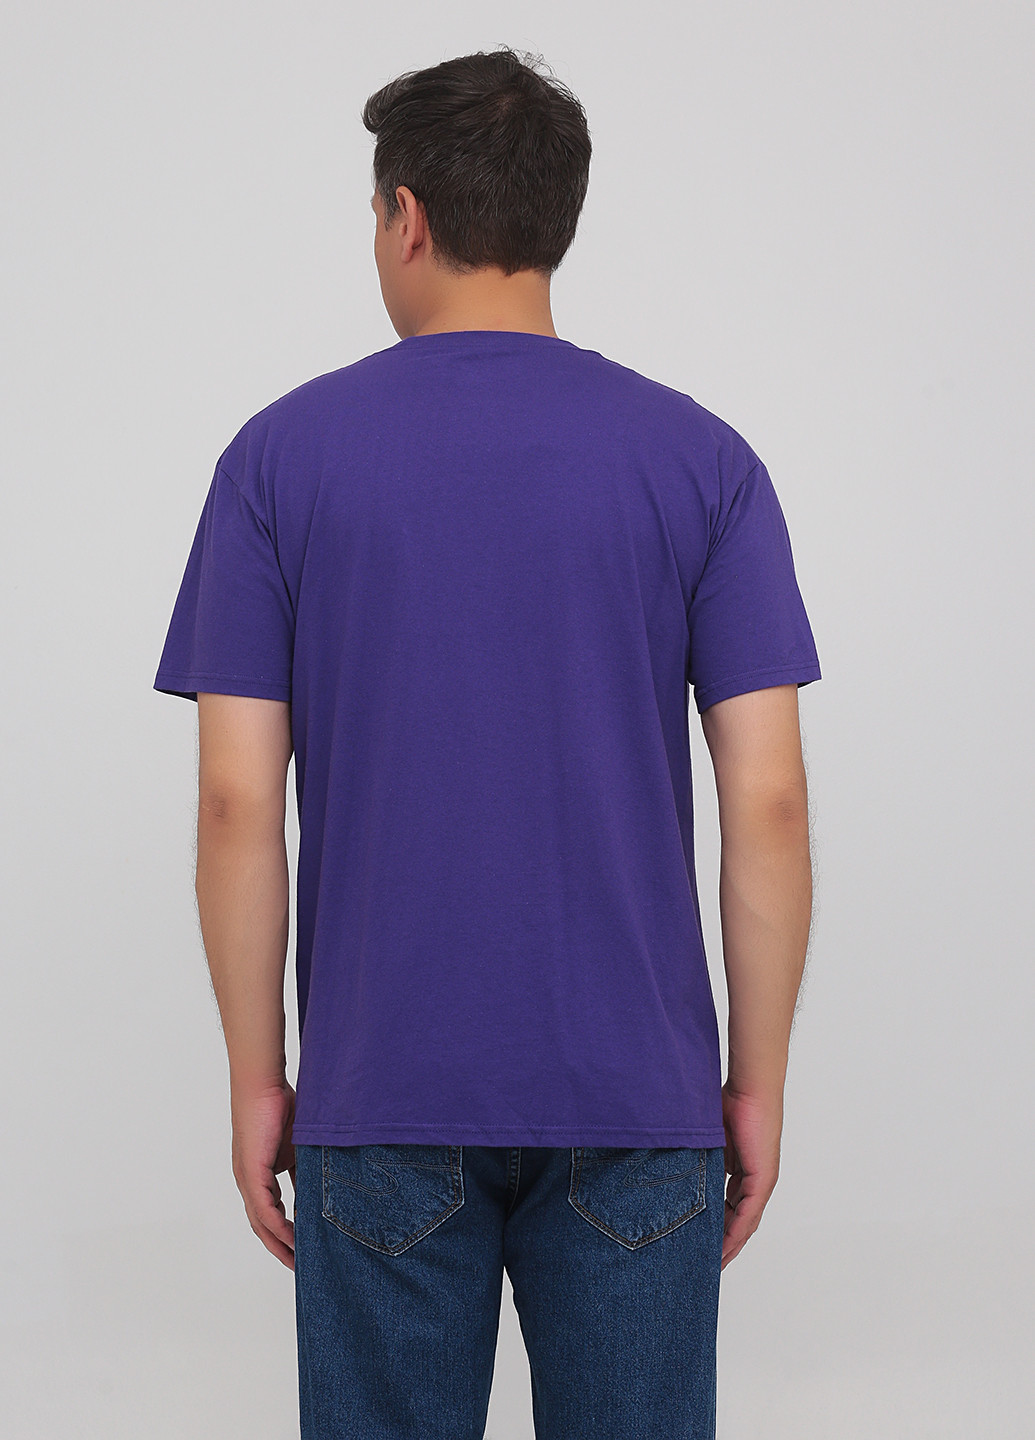 Фіолетова футболка The original retro brand